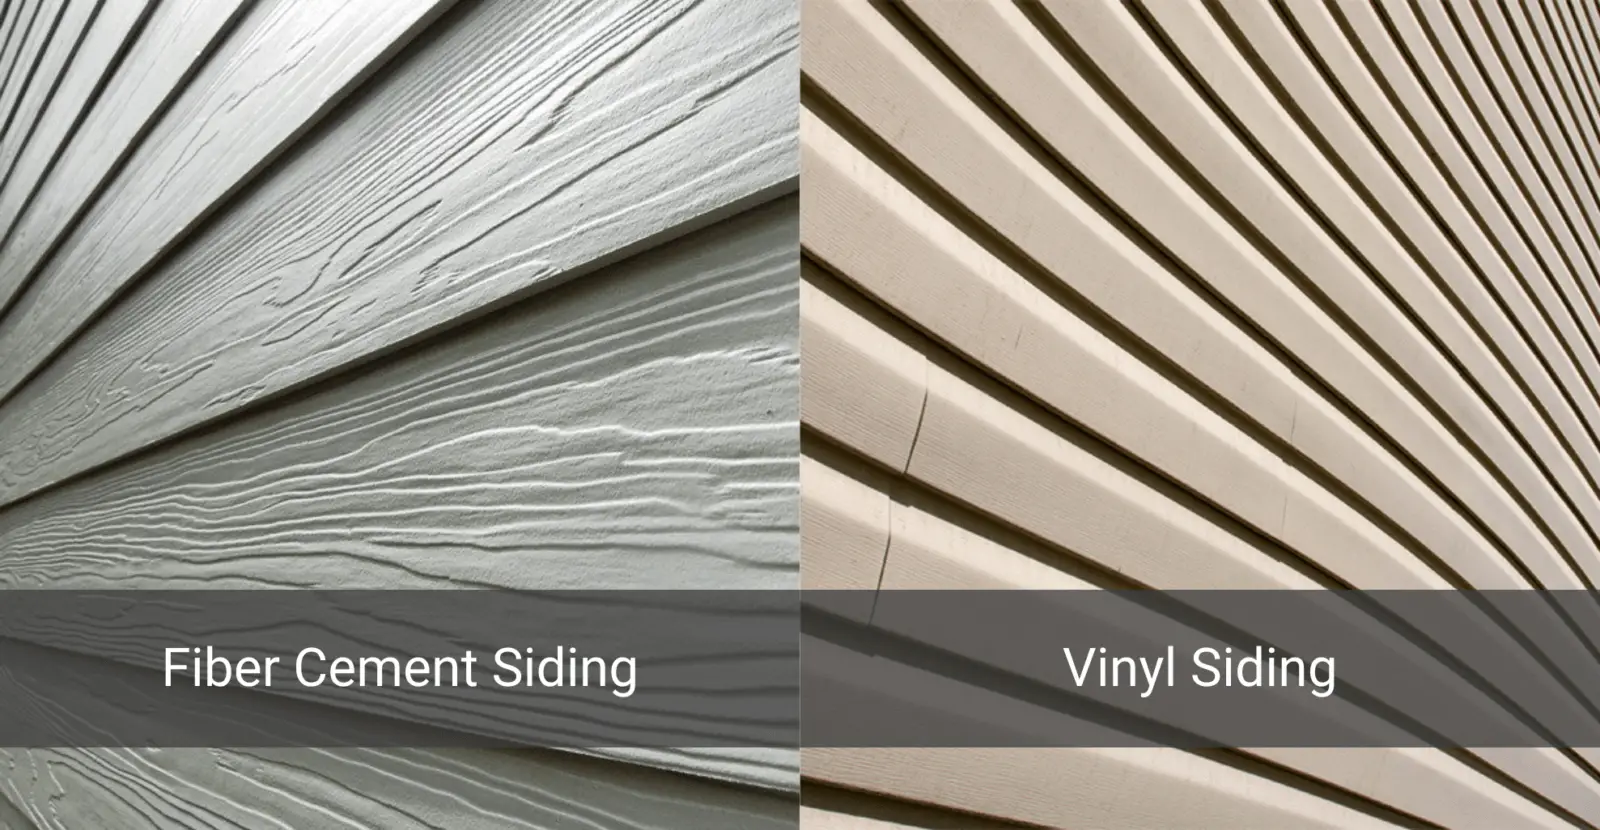 Comparing Vinyl vs Fiber Cement Siding